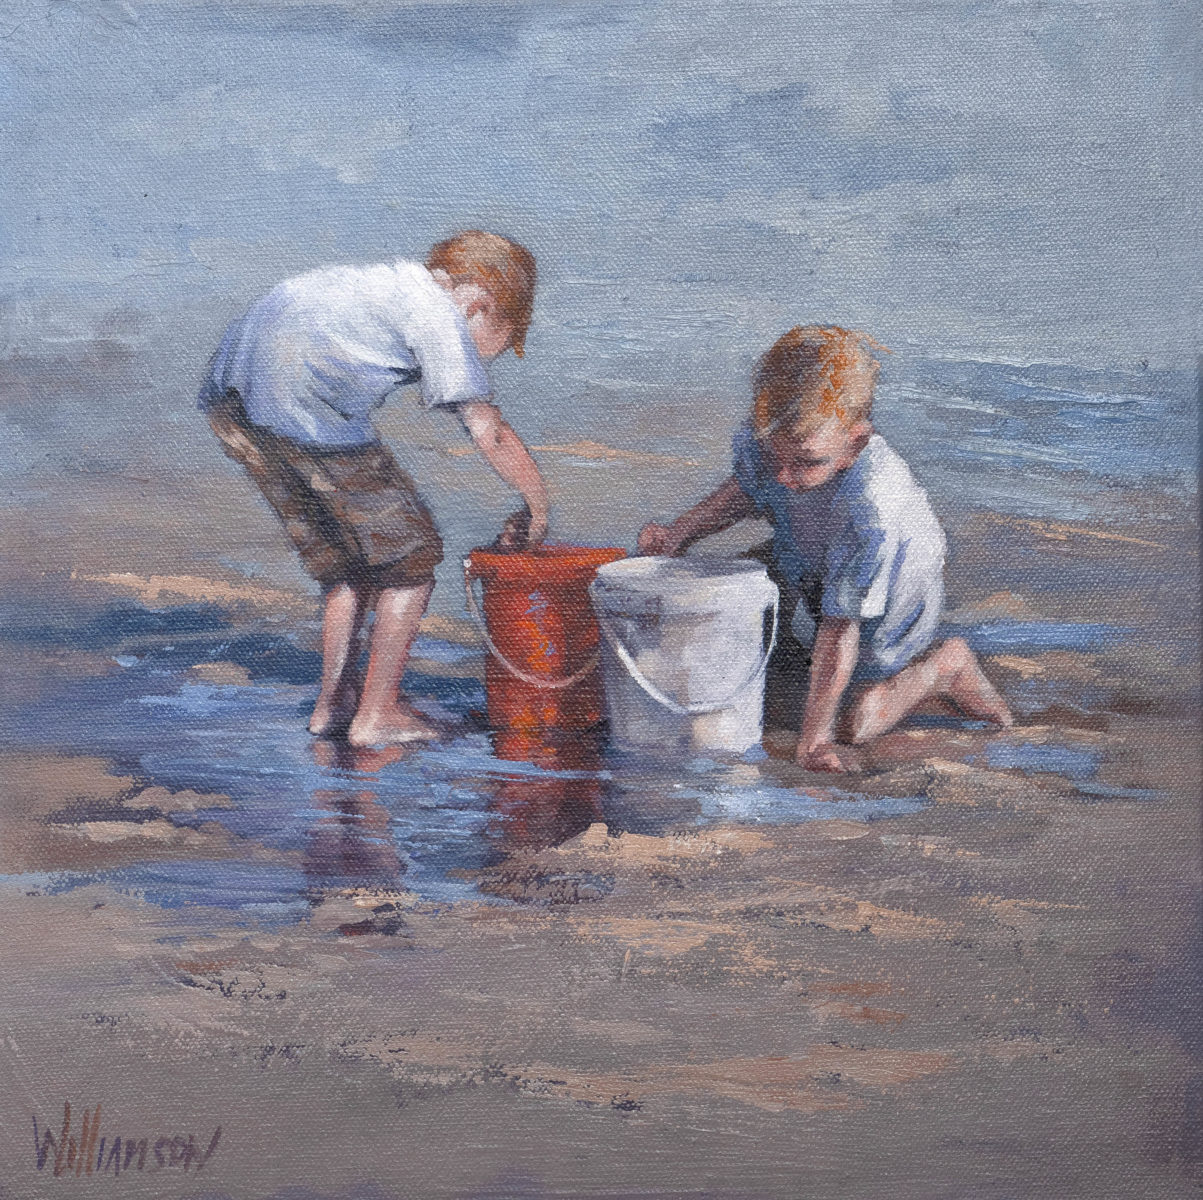 Two Buckets | Jan Williamson | Oil on canvas | 30 x 30 cm | $1,800